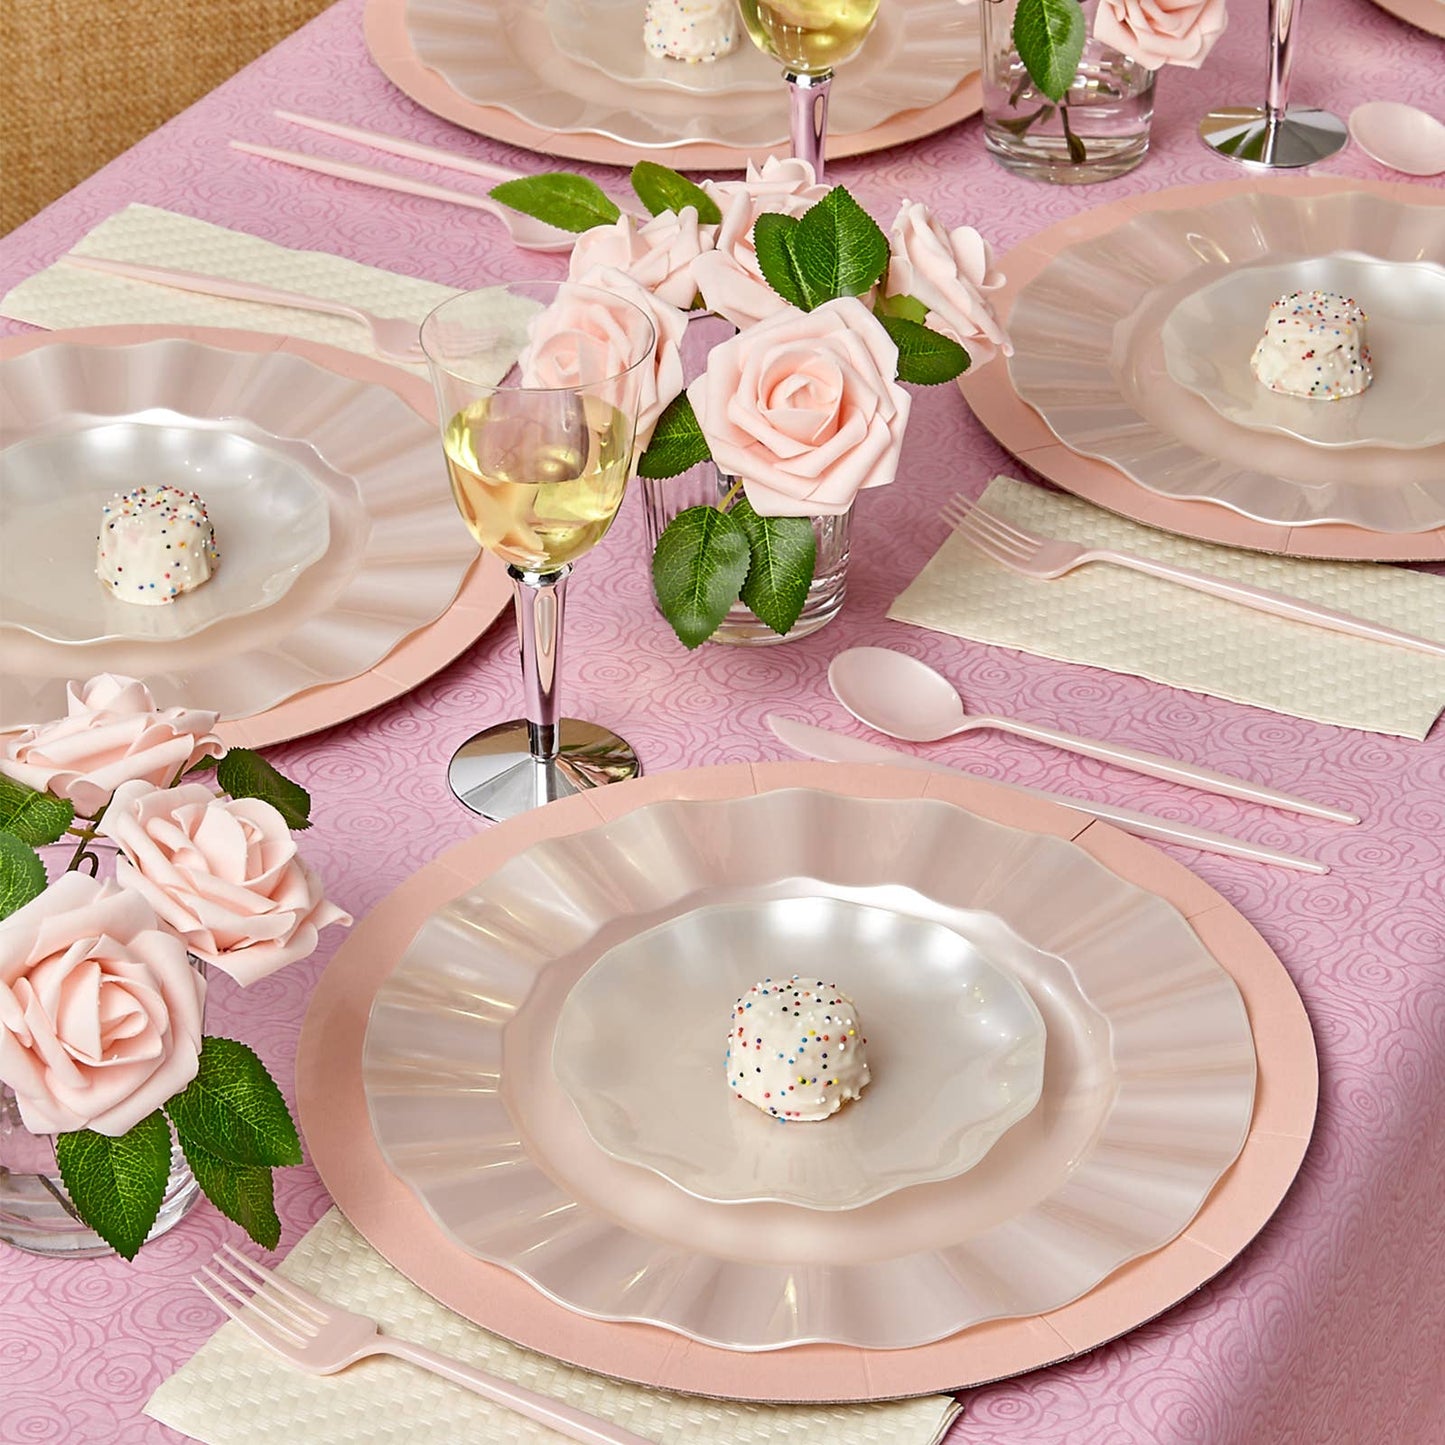 Veil Dinnerware Plates - Pearl: Dinner Plates